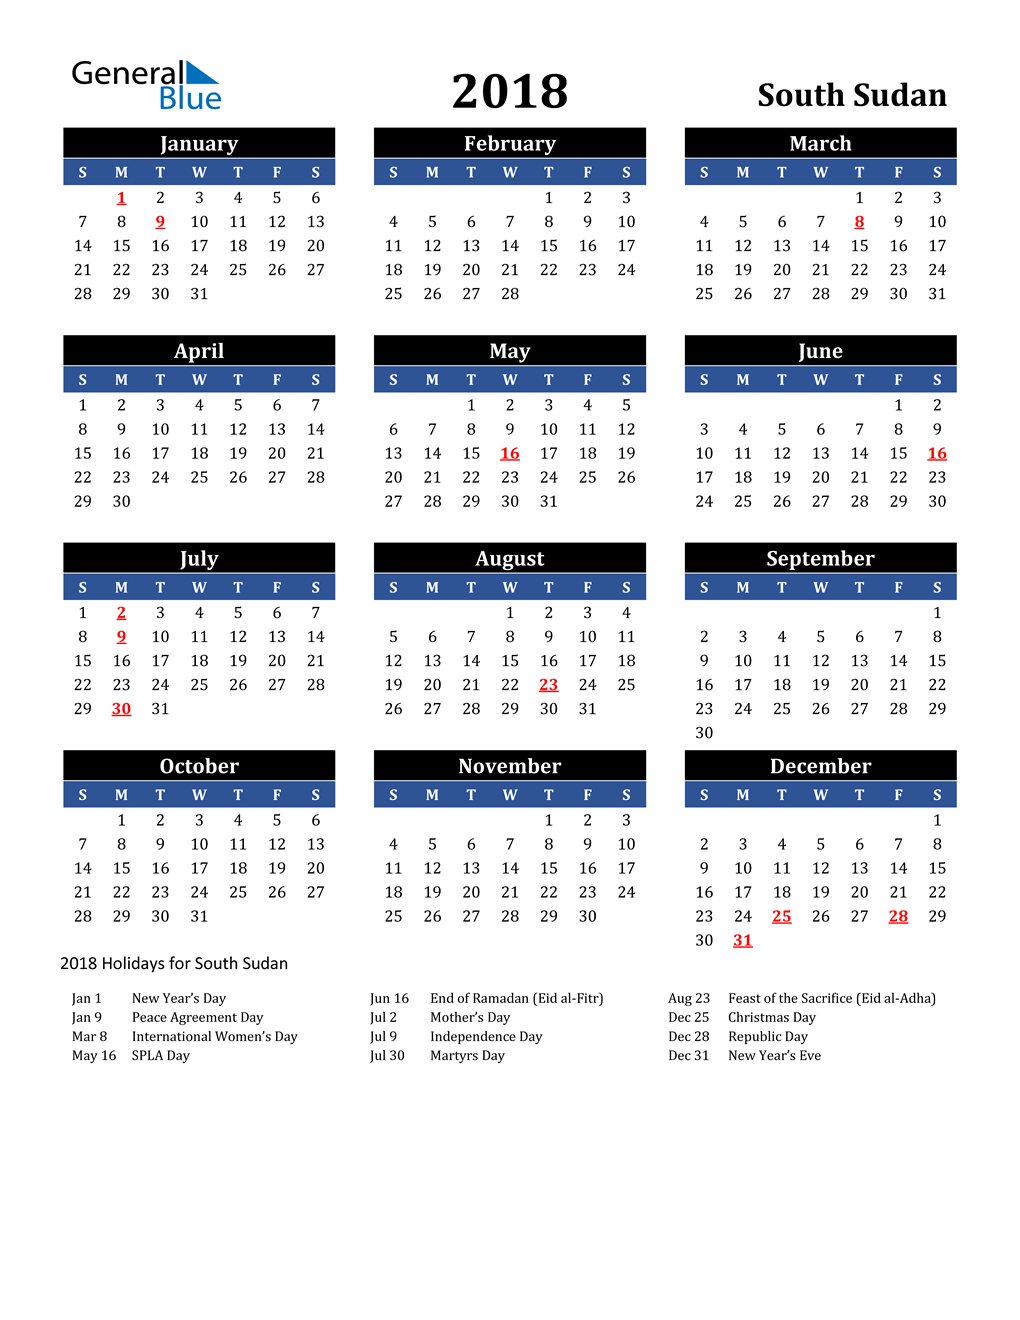 2018 South Sudan Calendar with Holidays